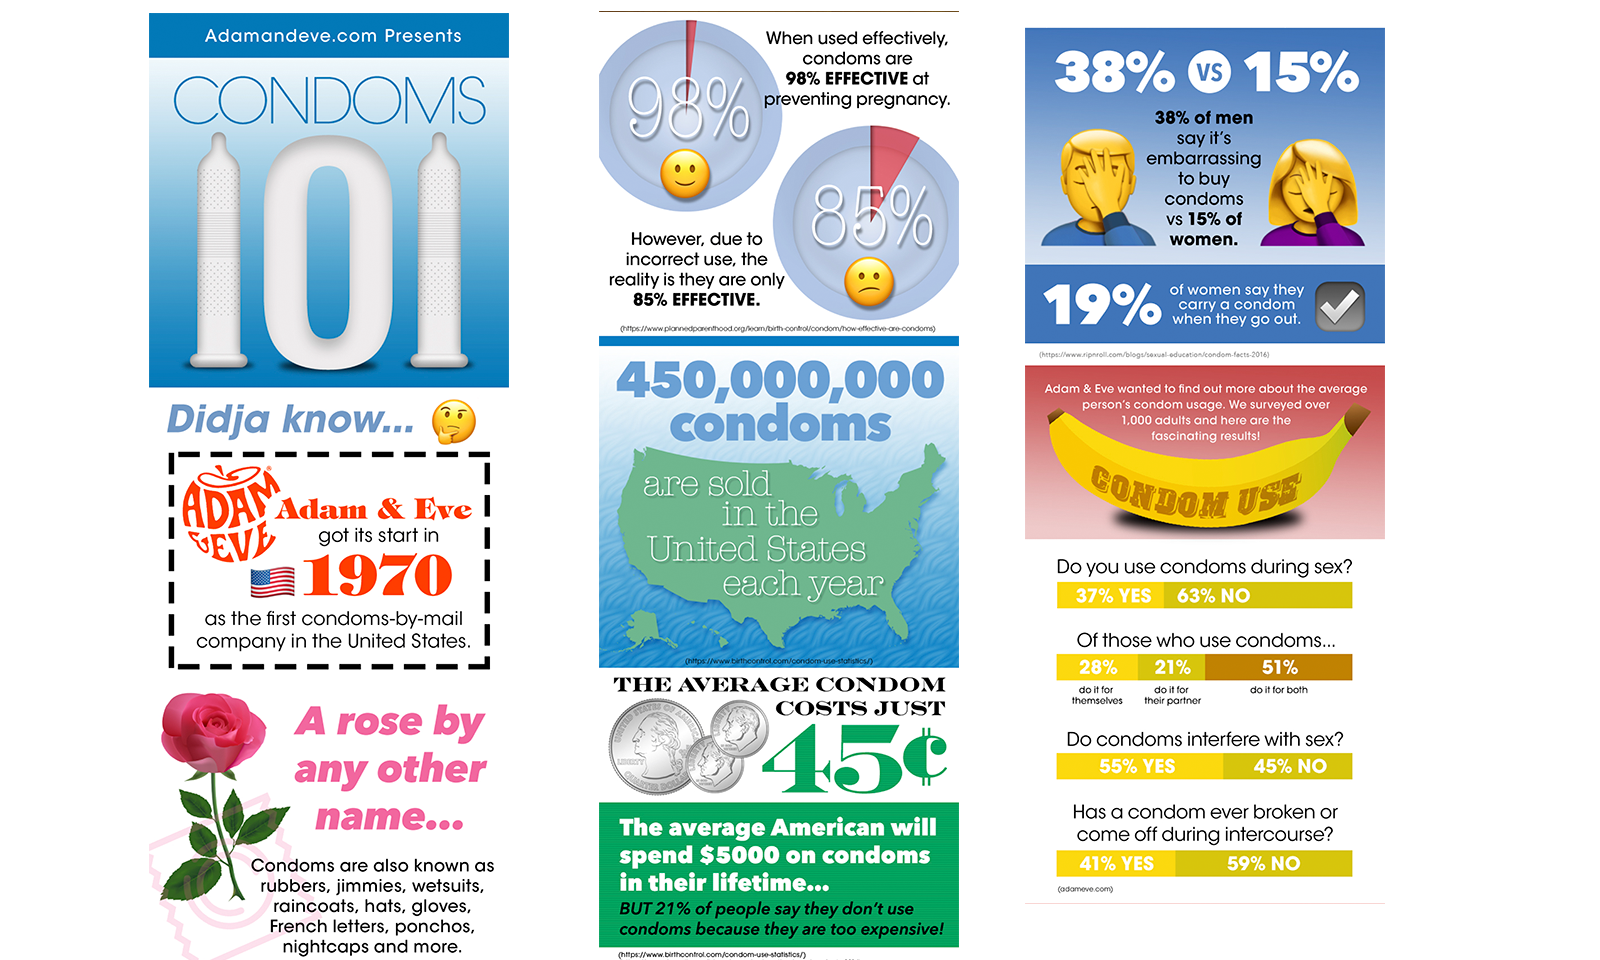 AdamEve.com Survey Asked, Do Condoms Interfere With Sex?